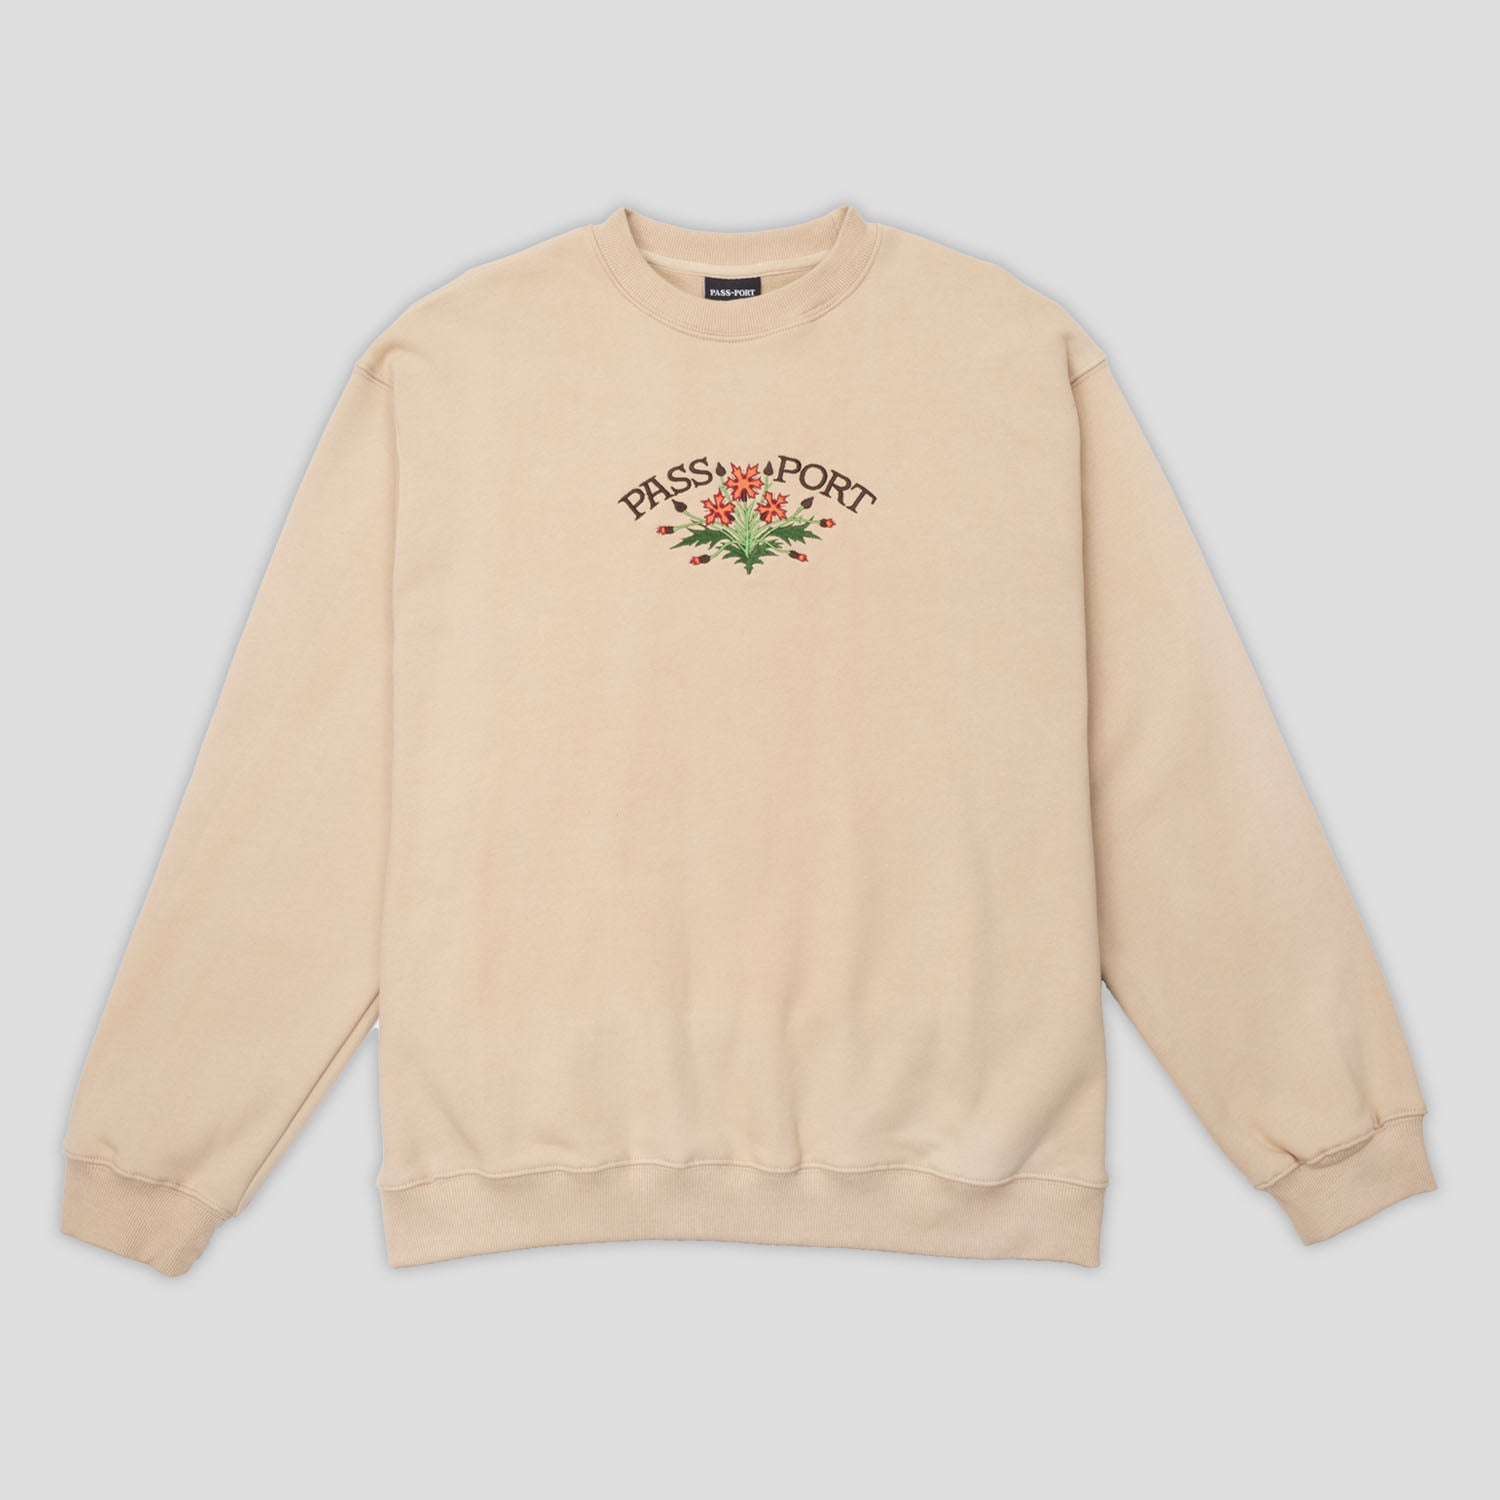 Pass~Port Bloom Organic Sweater - Sand